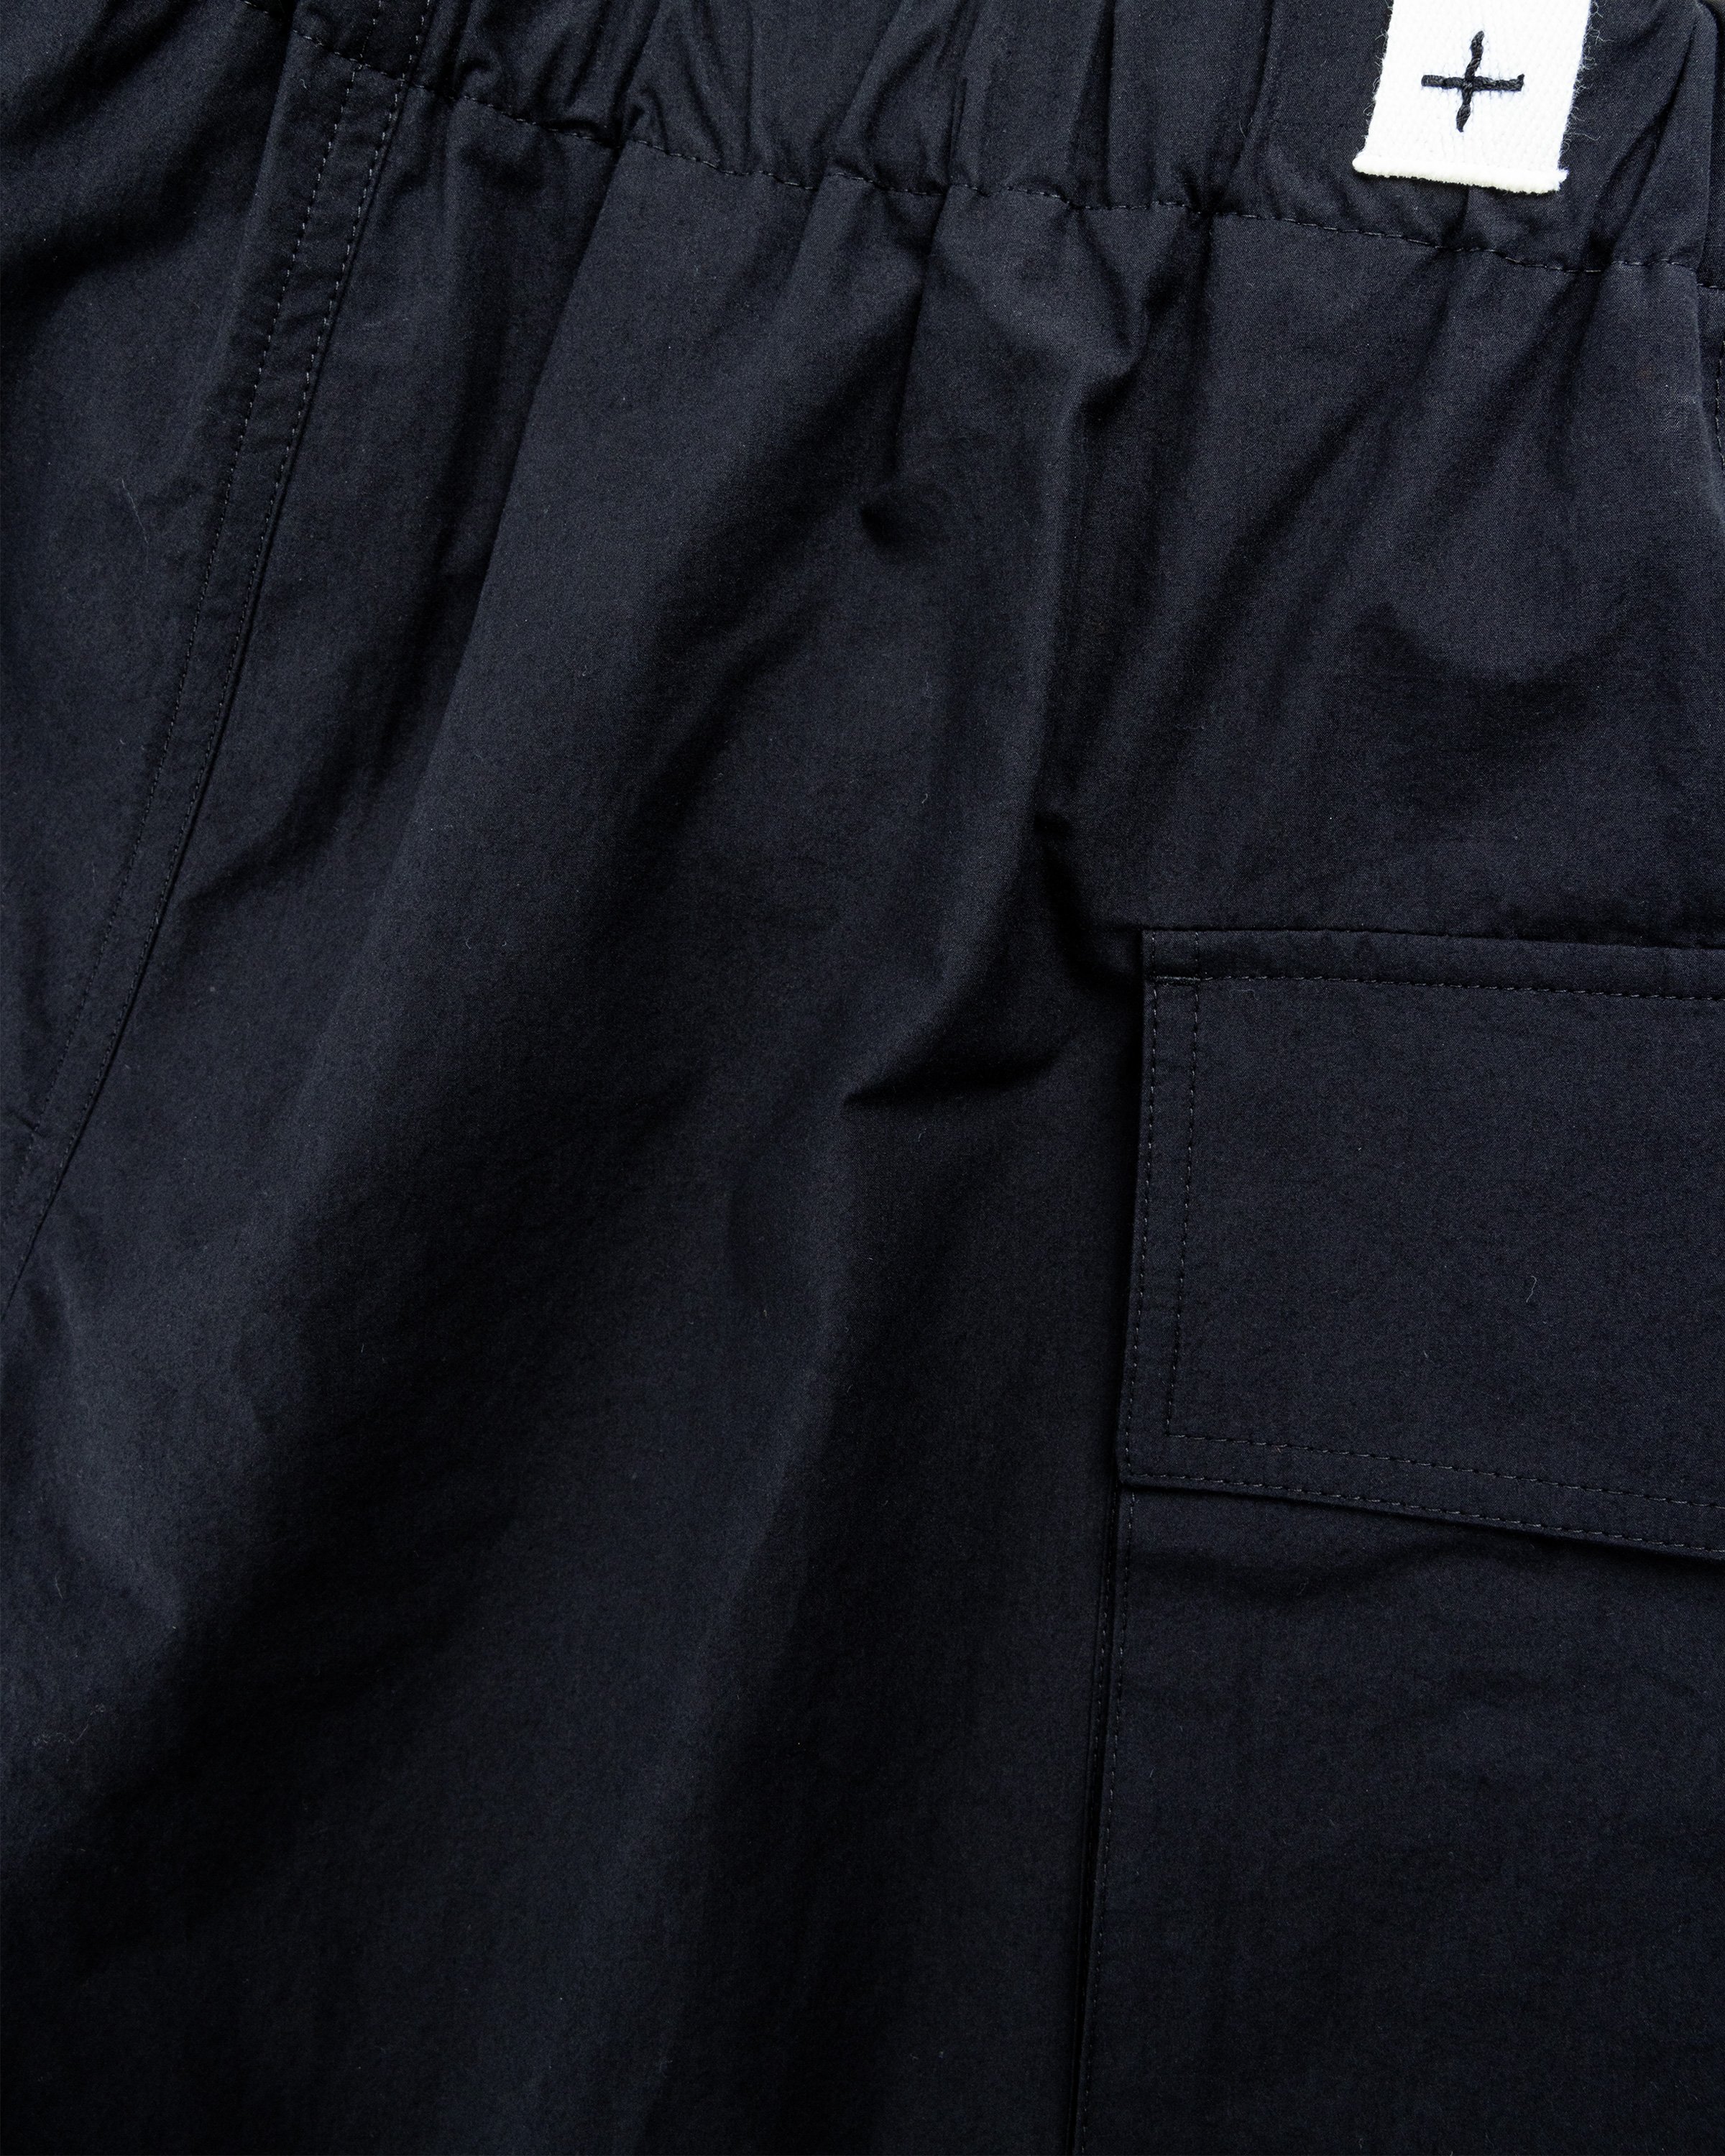 Jil Sander - Trouser 94 Short - Clothing - Black - Image 6